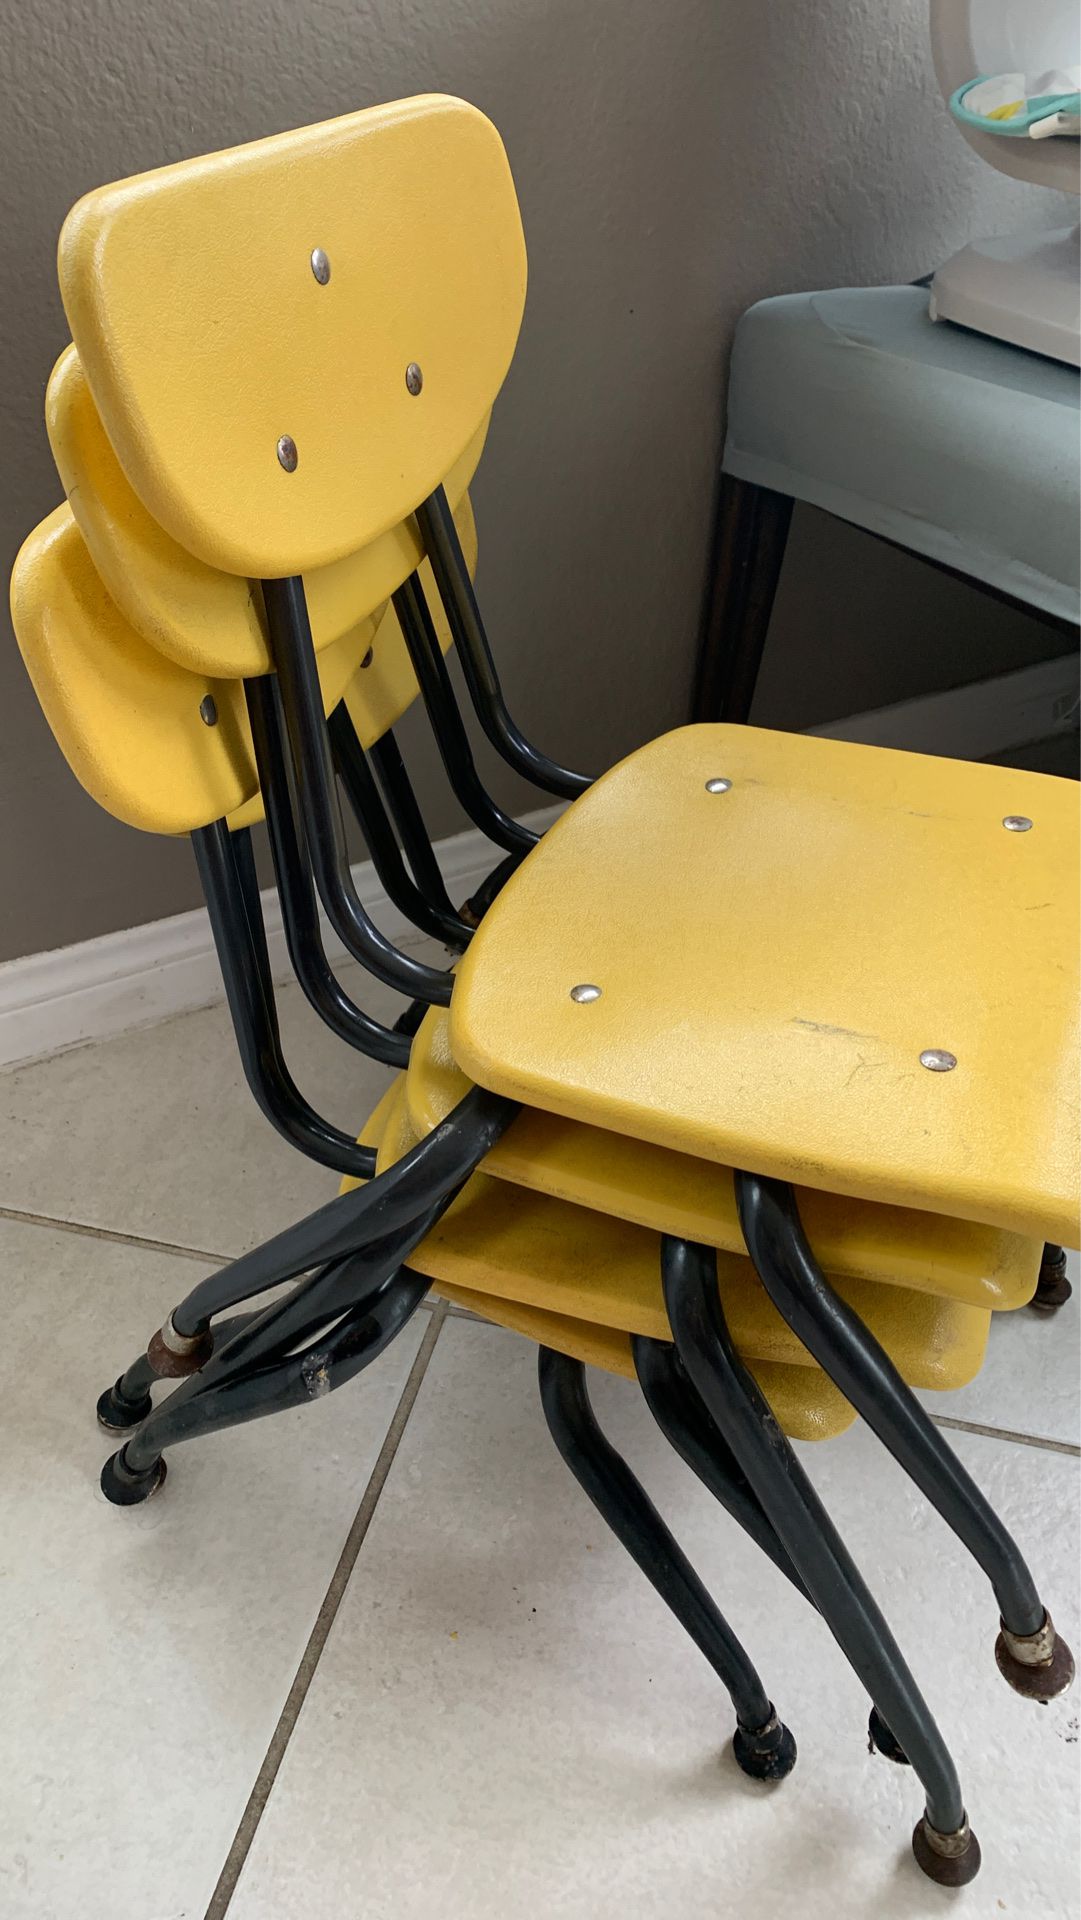 Kid size school chairs